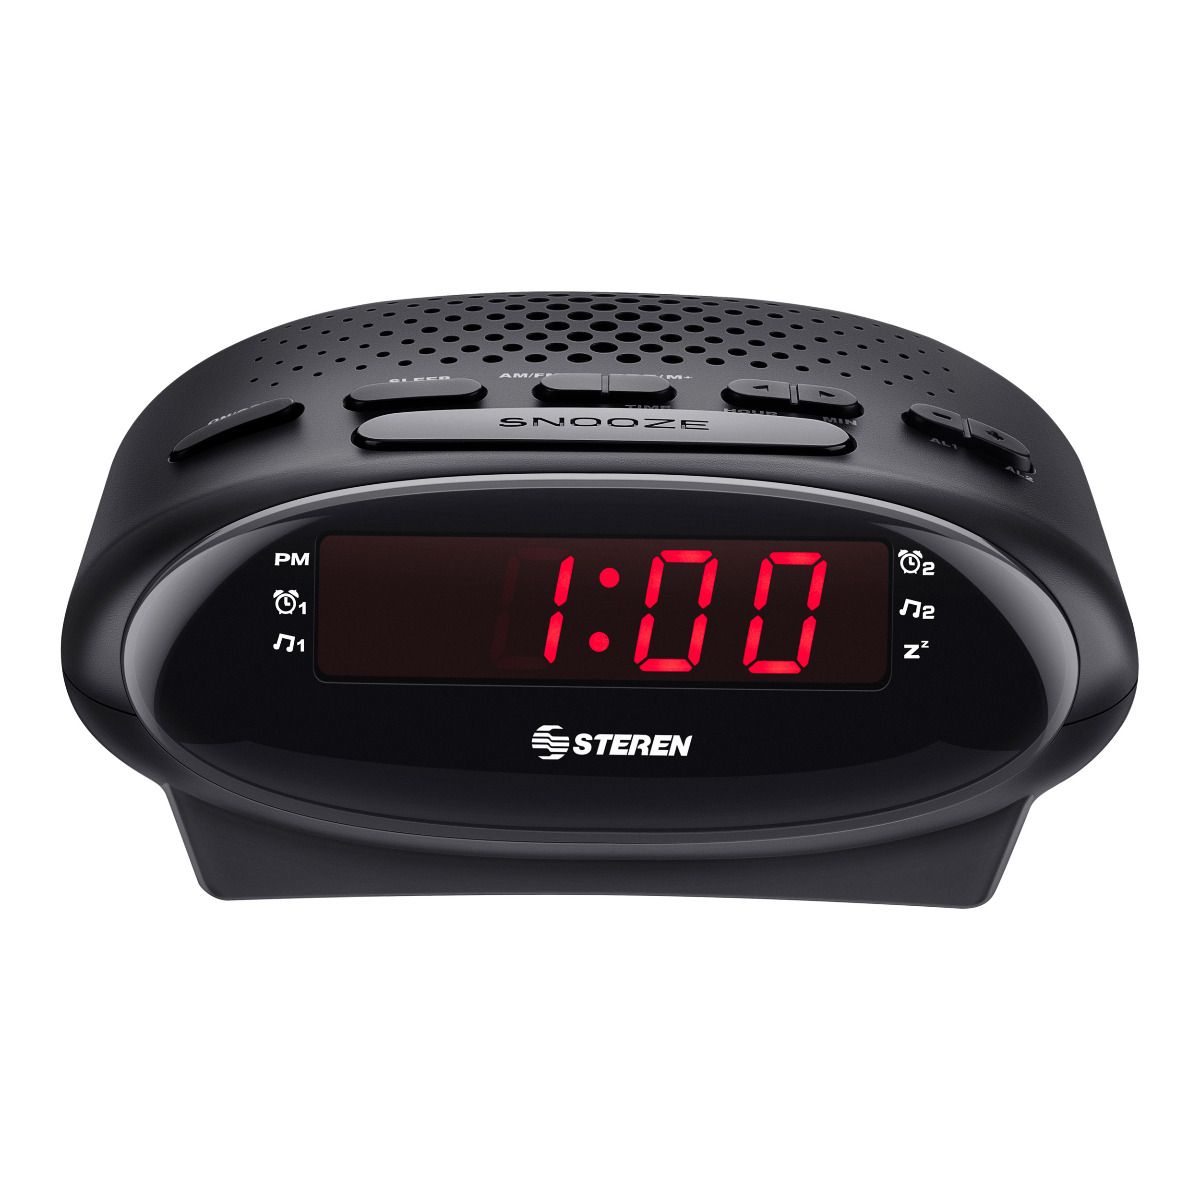 Tfa 60.2530.04 radio despertador digital dcf-77 temperatura interna viaje despertador 2 alarmas 